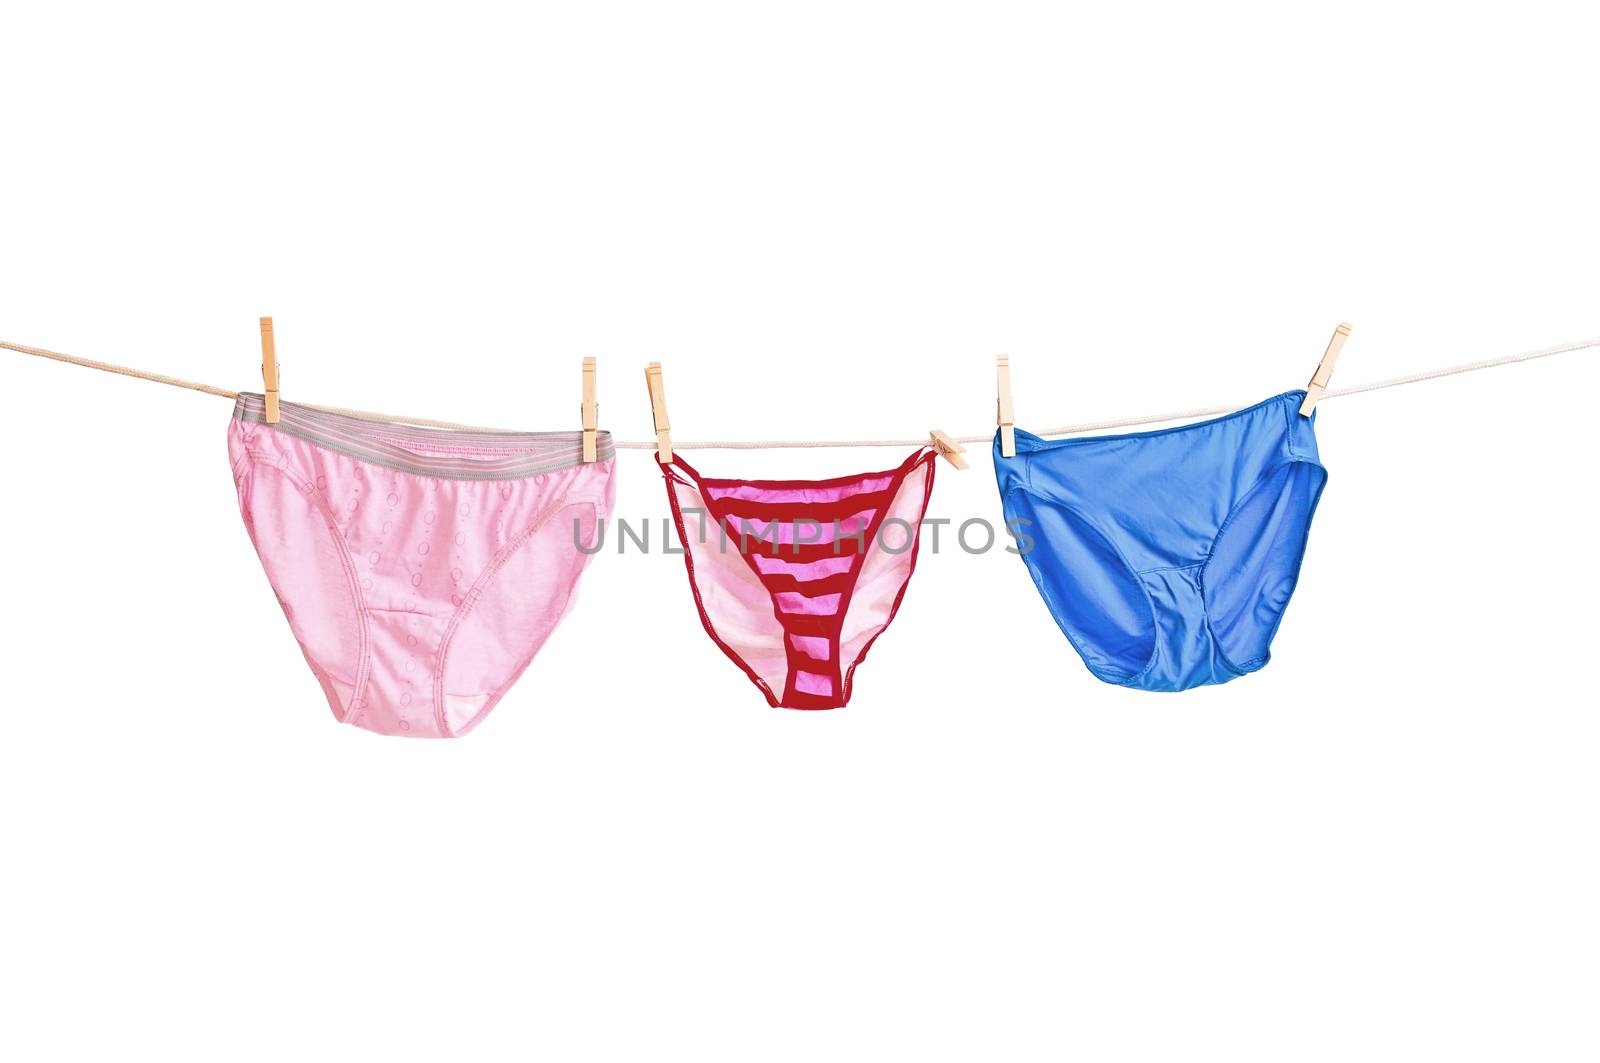 Three Pair of Panties on Clothesline by rcarner